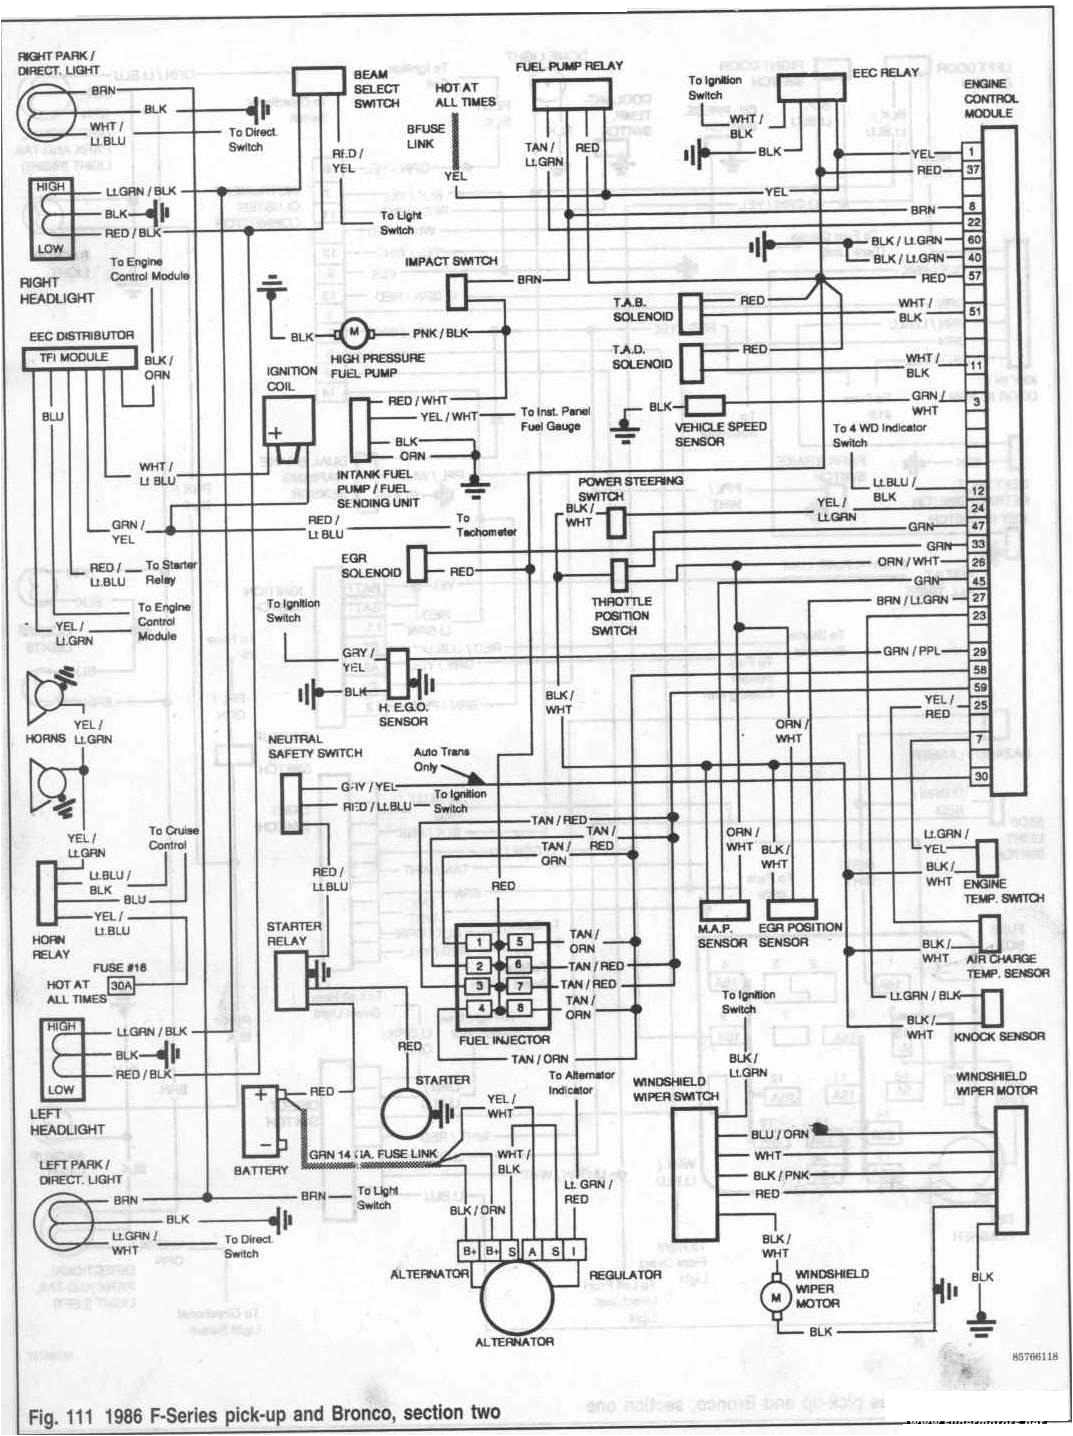 1994 ford Bronco Wiring Diagram Af79 89 F250 Fuse Box Diagram Wiring Library